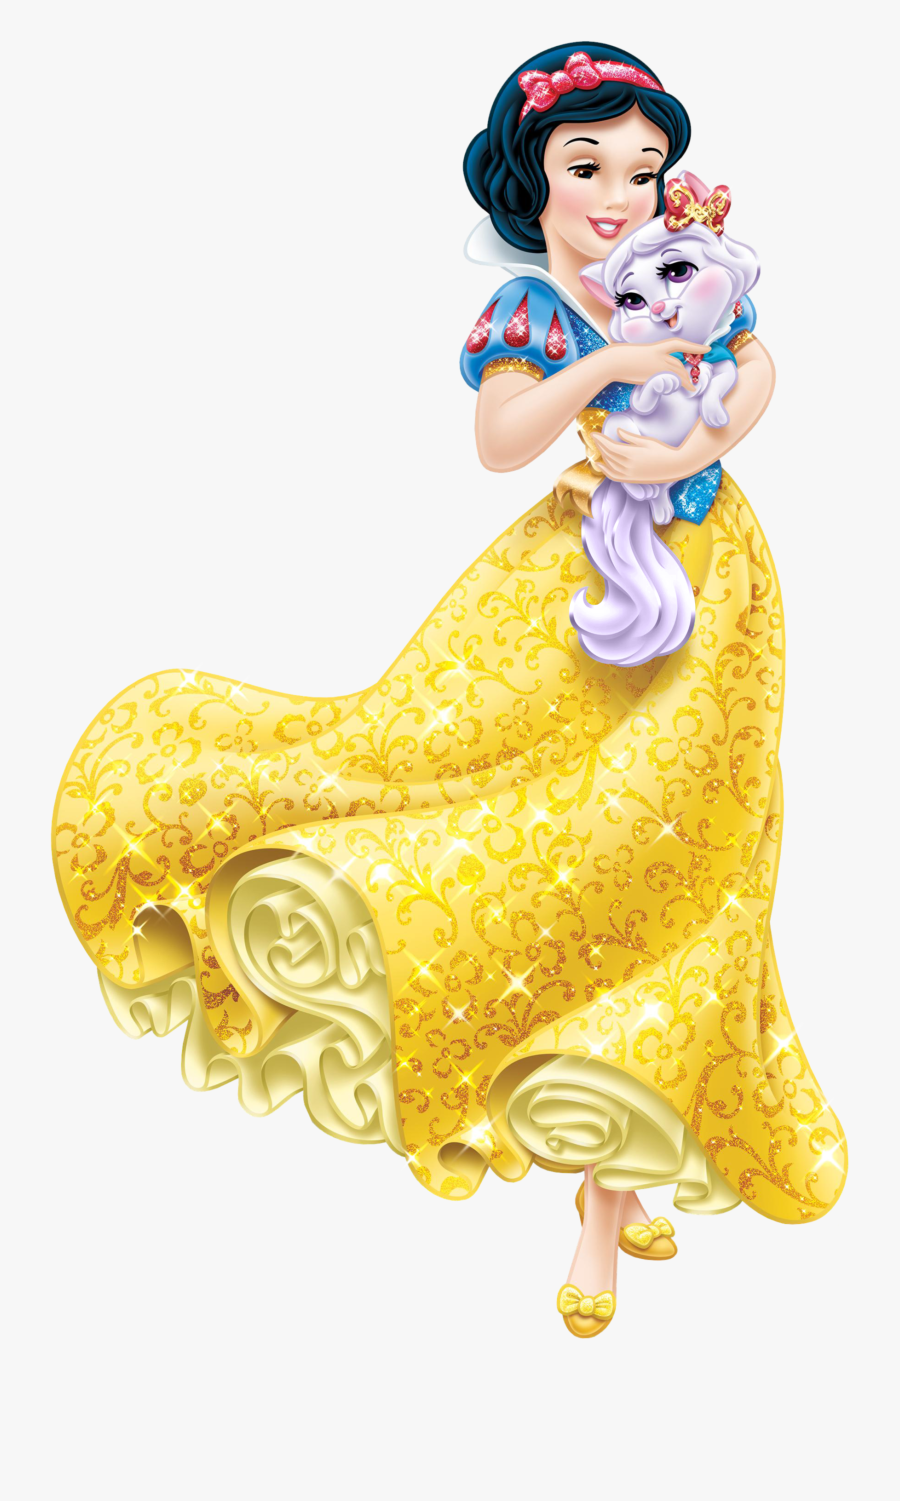 Disney Princesses Png - Snow White Disney Princess Hd, Transparent Clipart